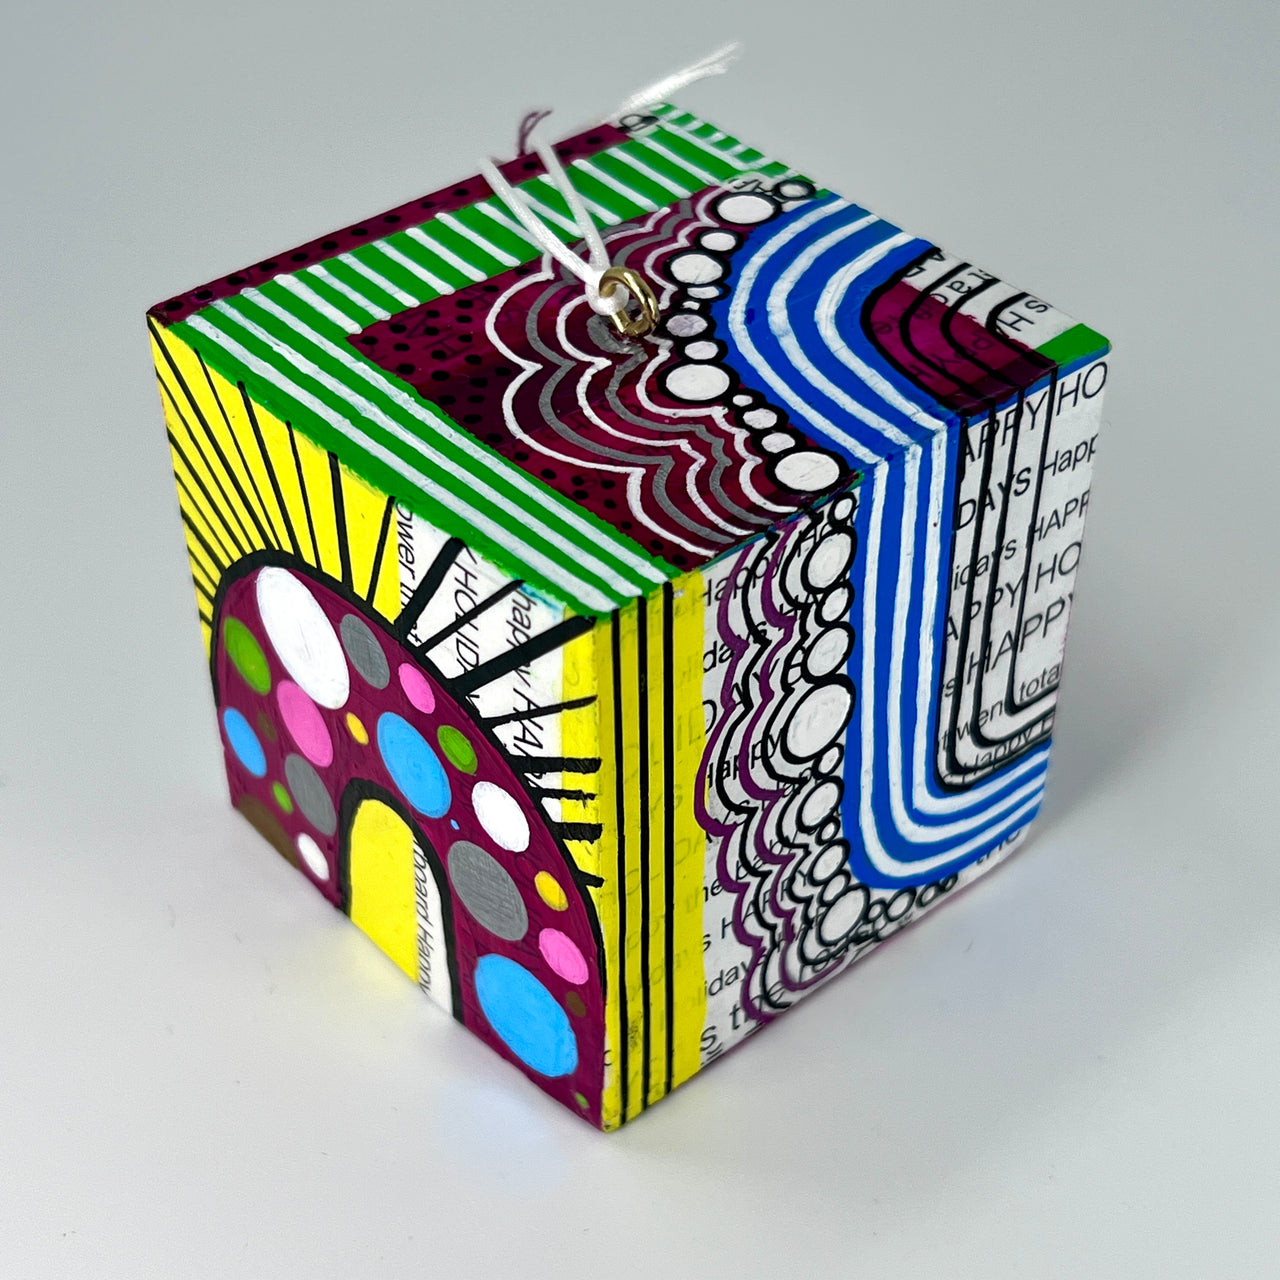 #26 - 3D Cube Art - 2.25" cube